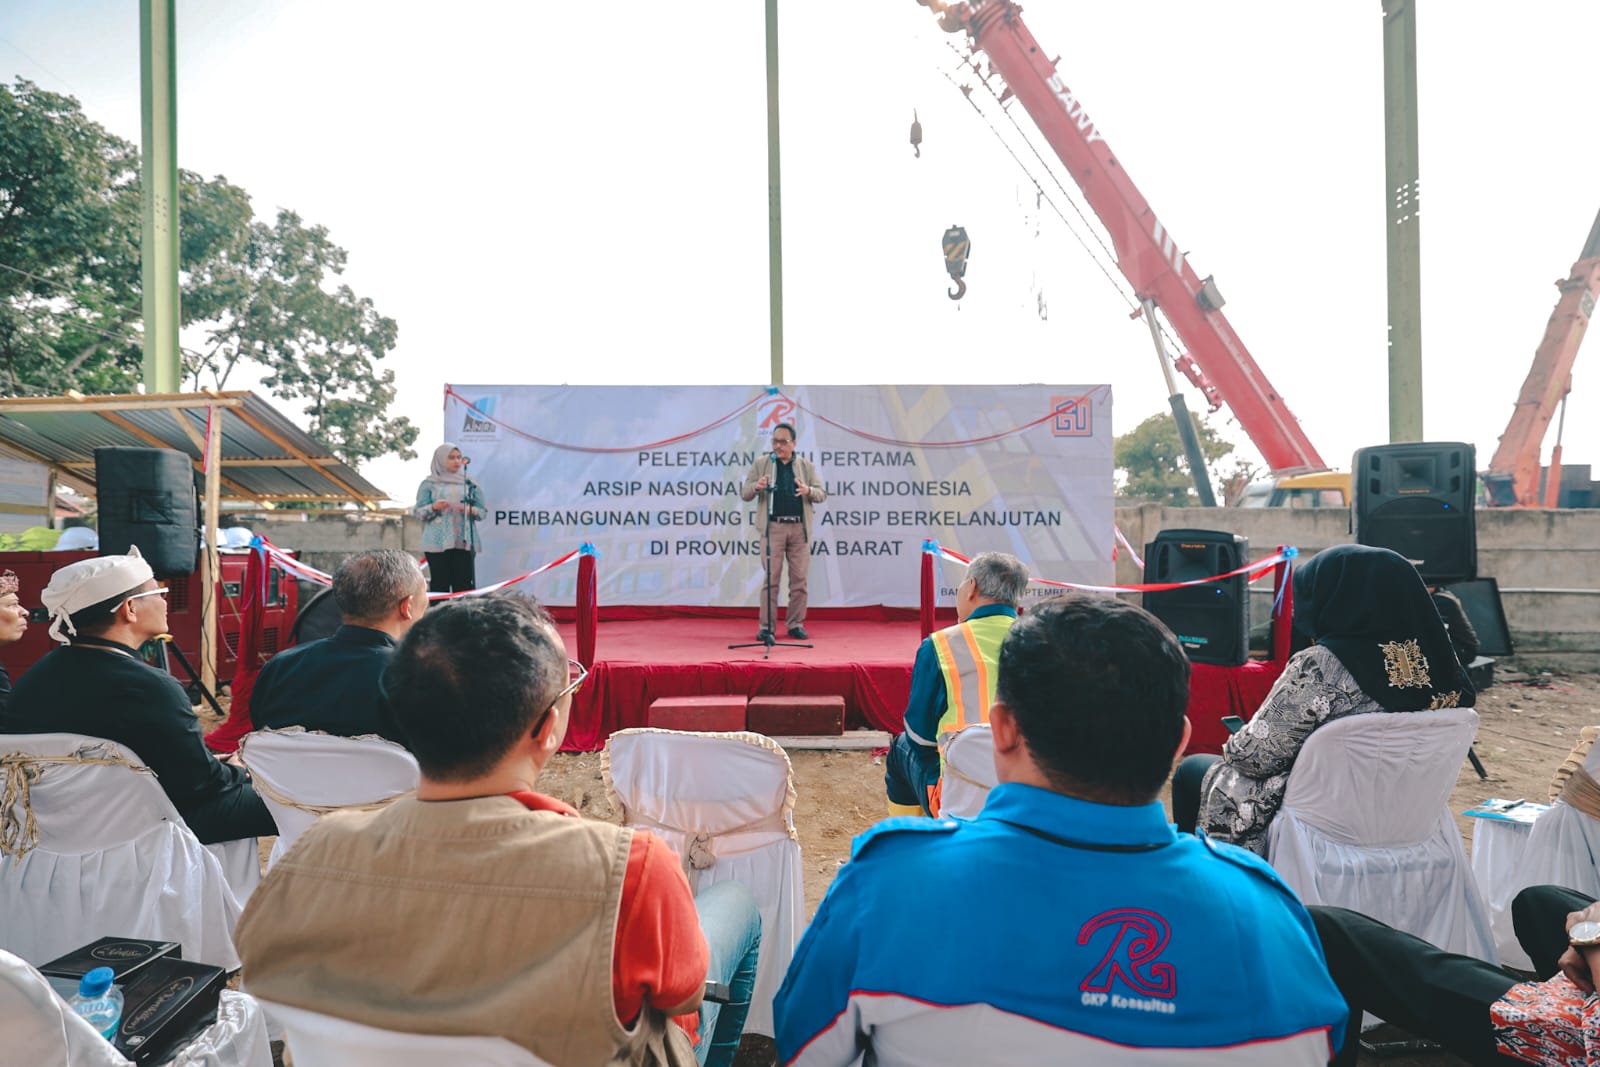 Peletakan Batu Pertama Pembangunan Gedung Depot Arsip Berkelanjutan di Provinsi Jawa Barat